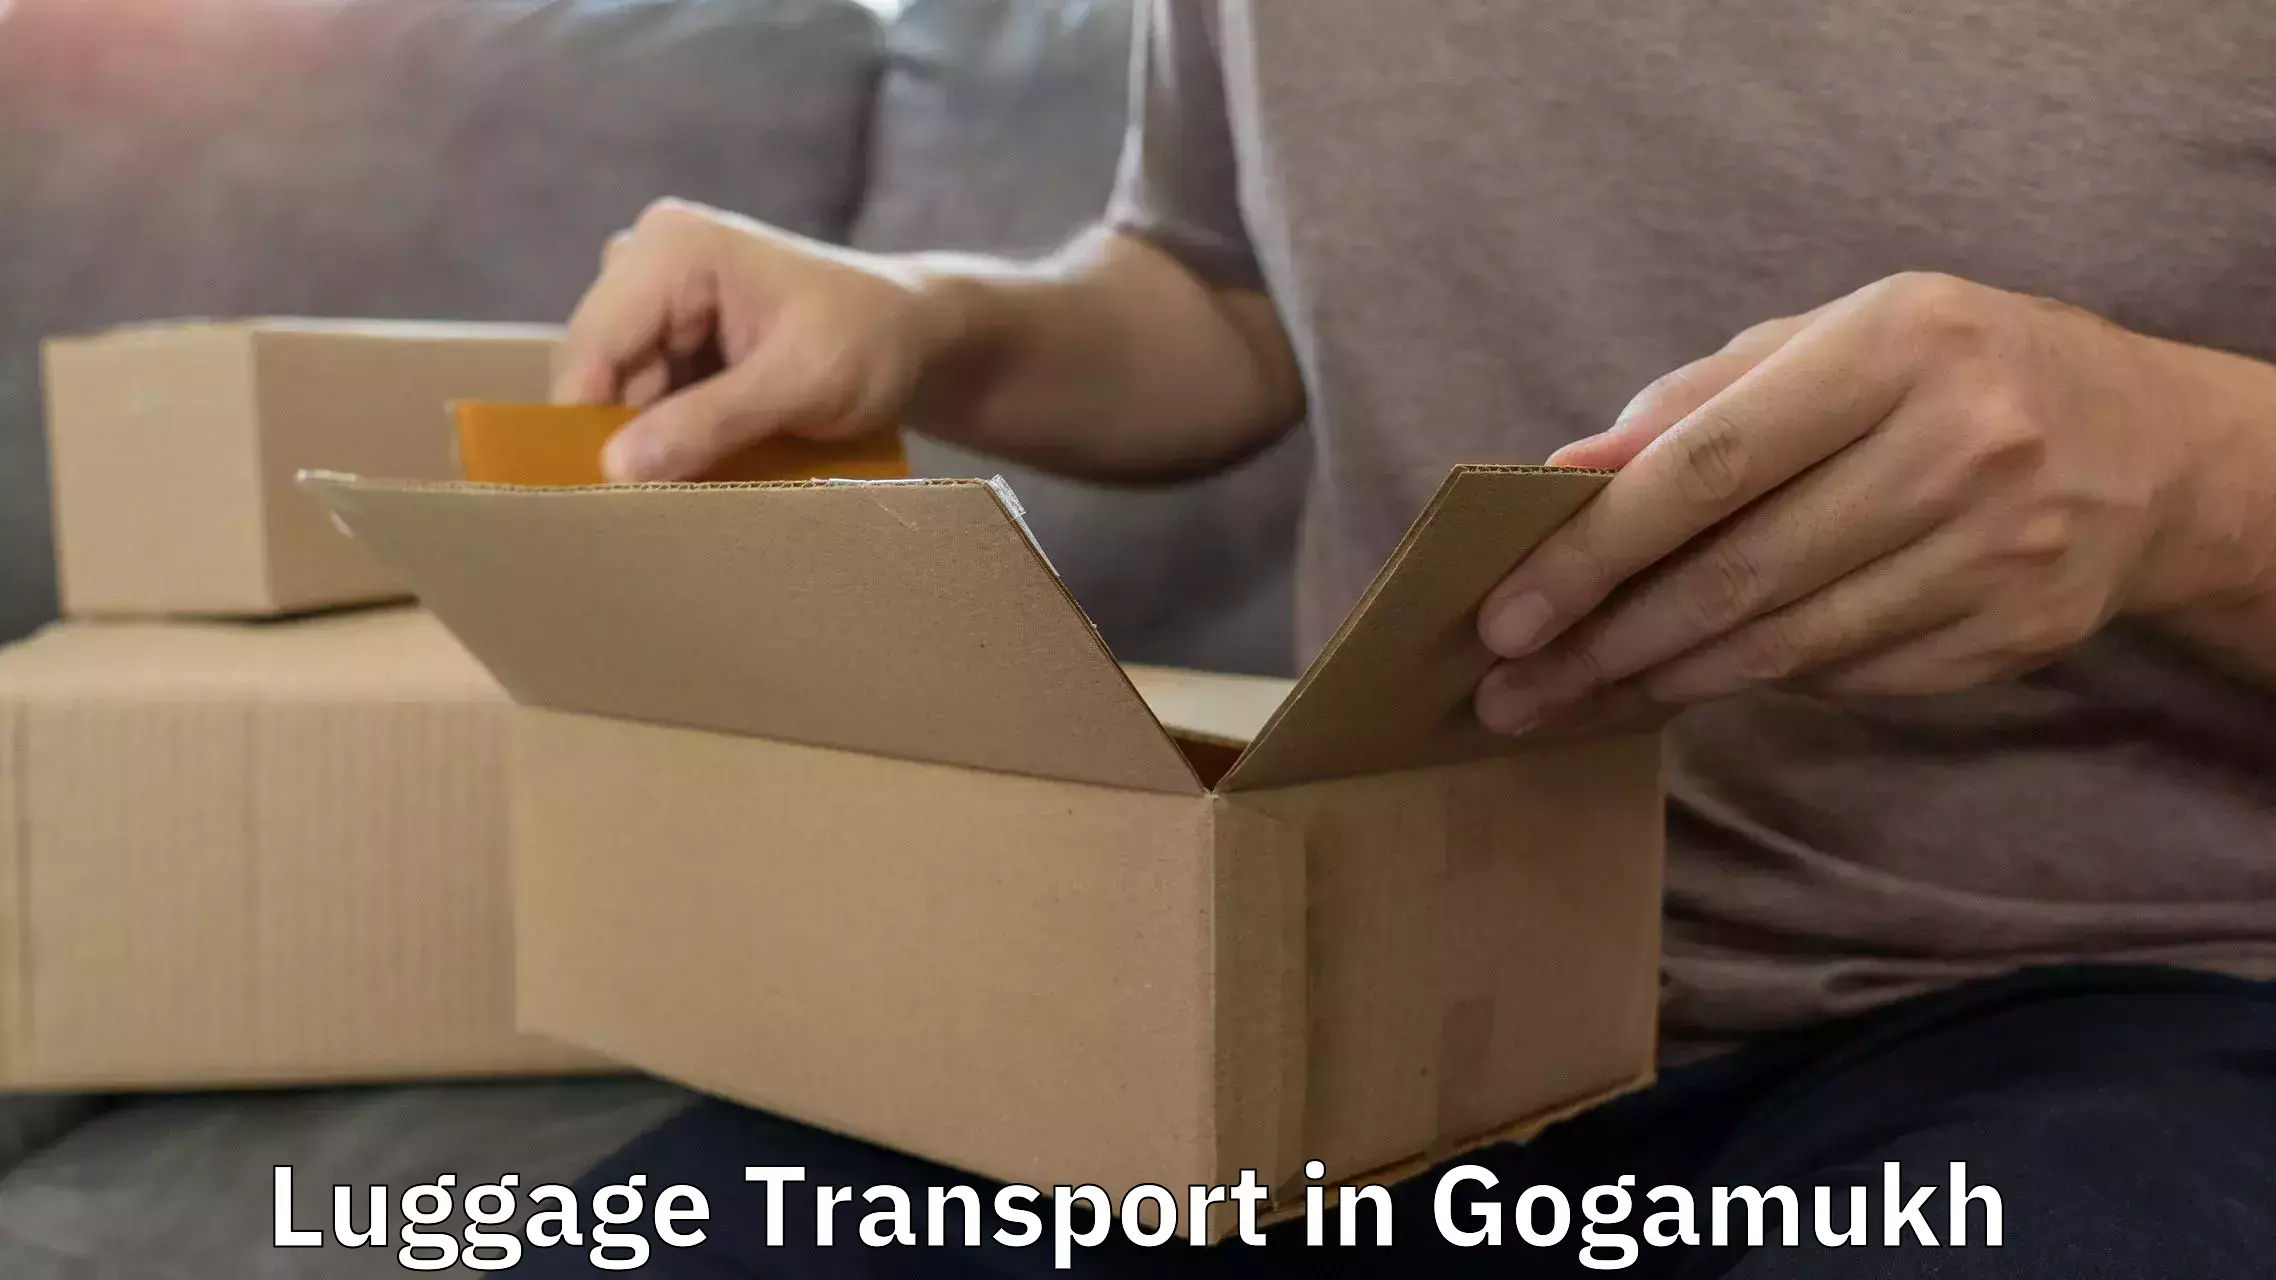 Luggage transport deals in Gogamukh